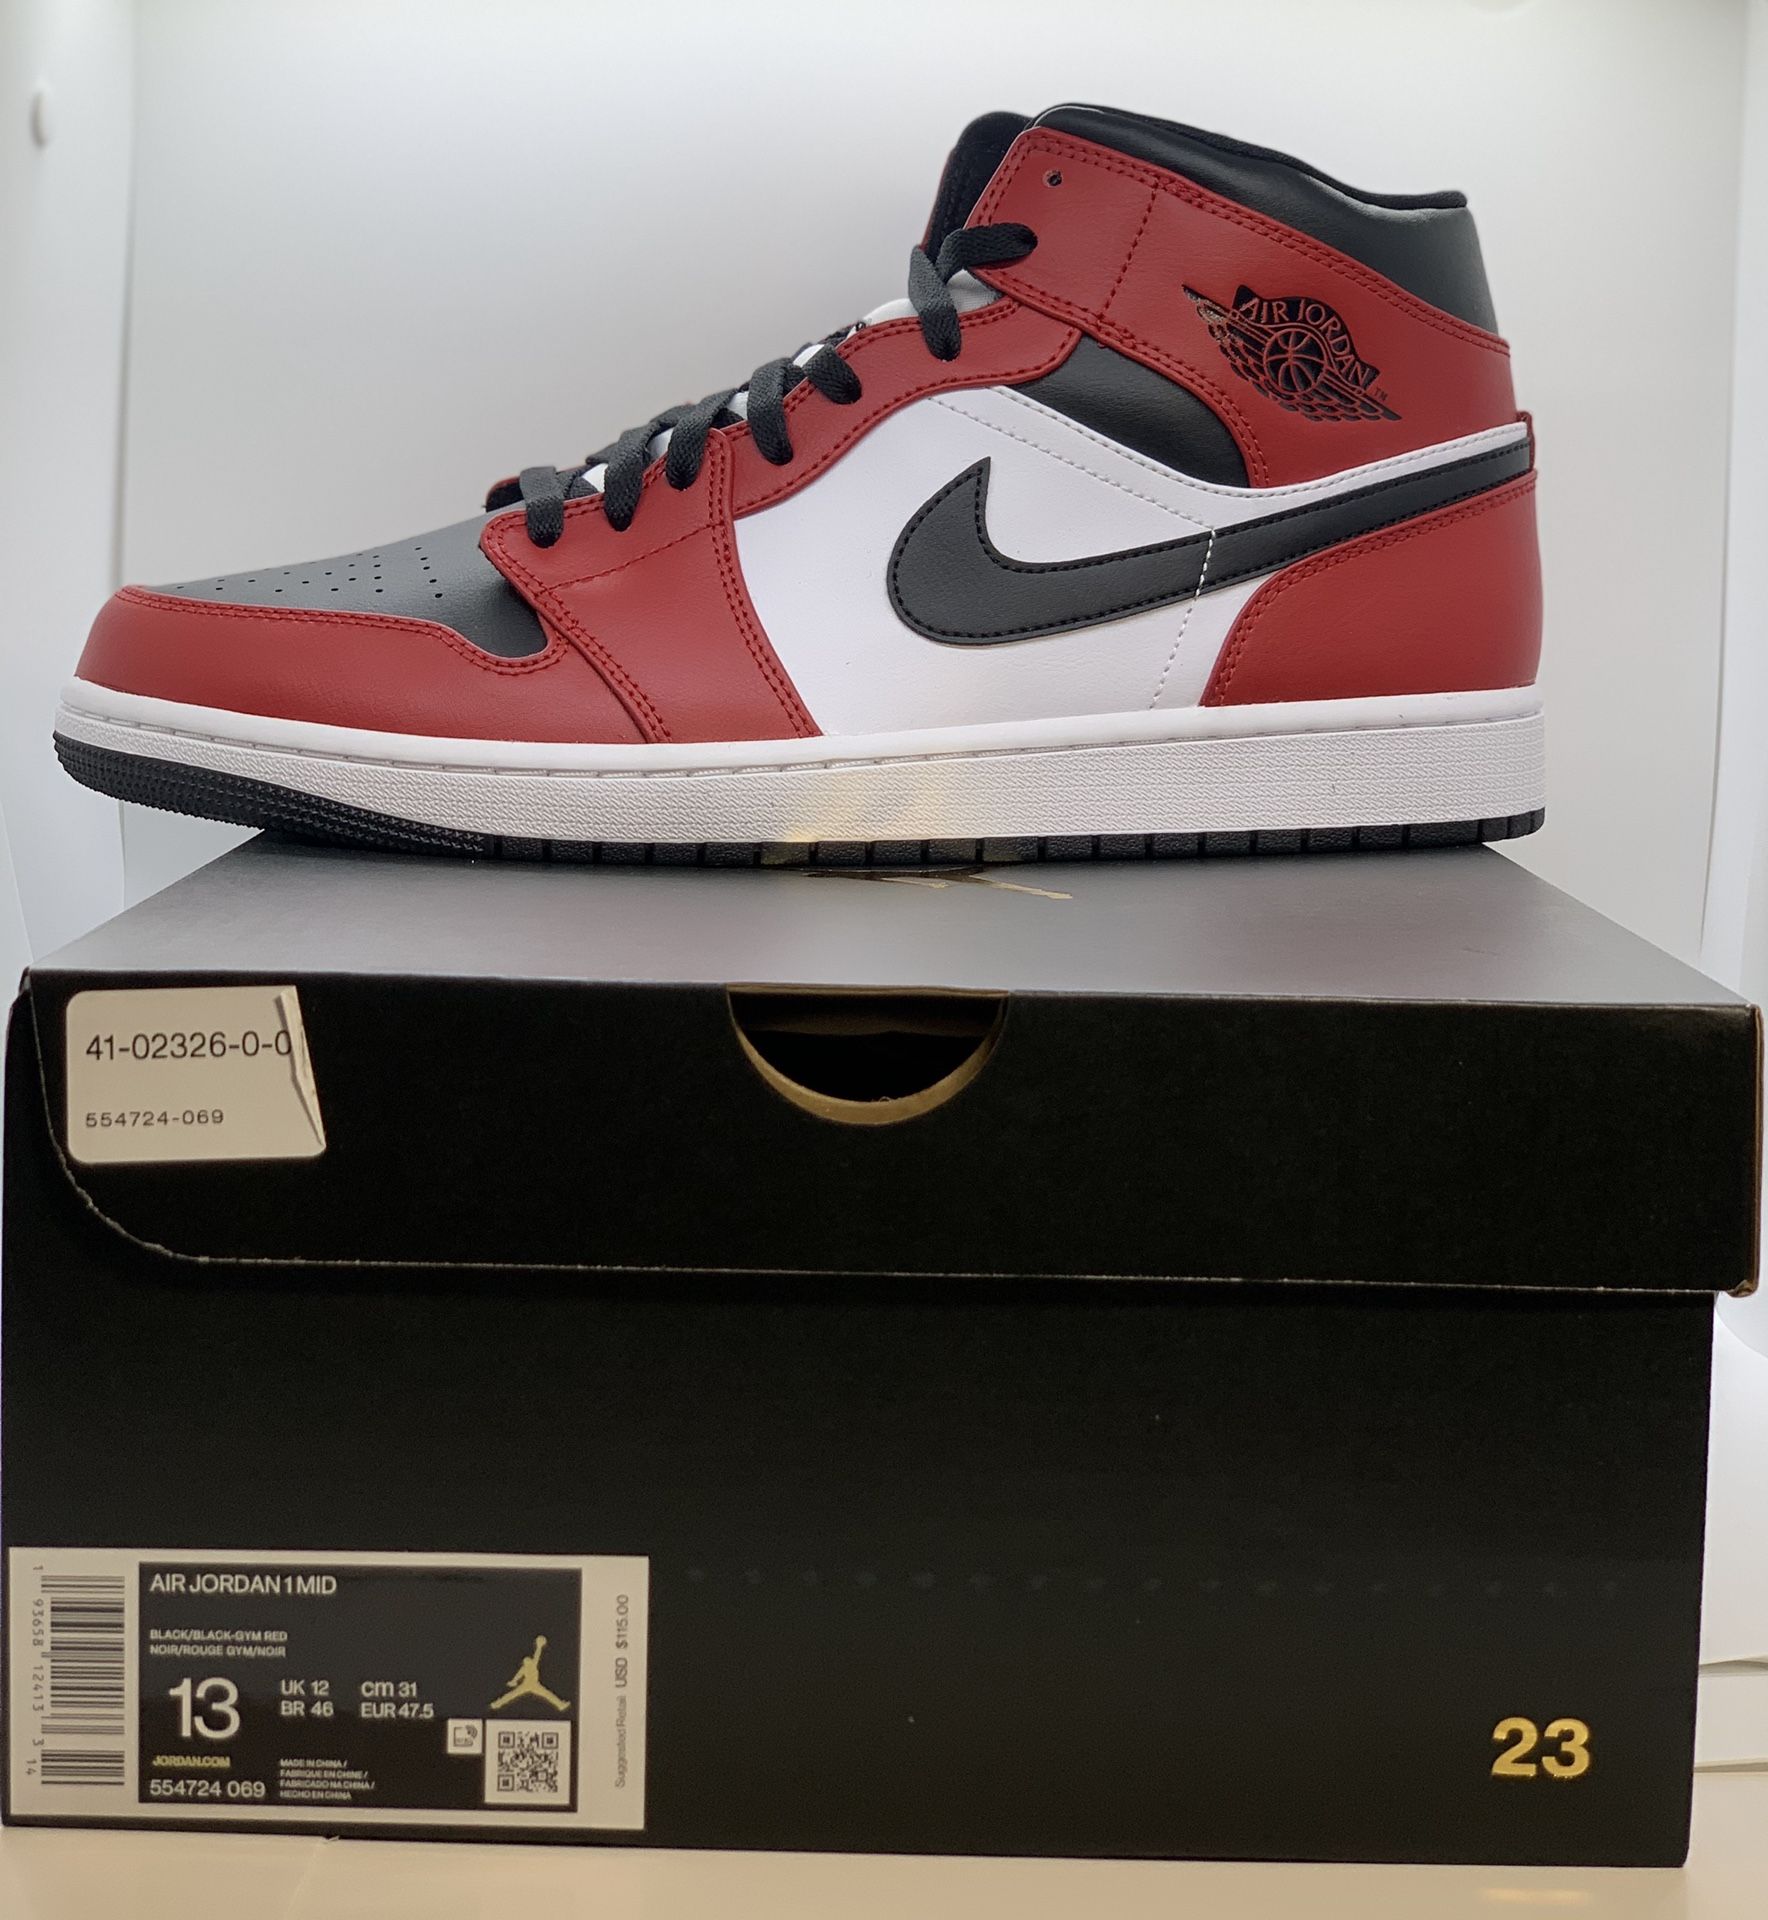 Air Jordan 1 mid “Chicago Black Toe” size 13